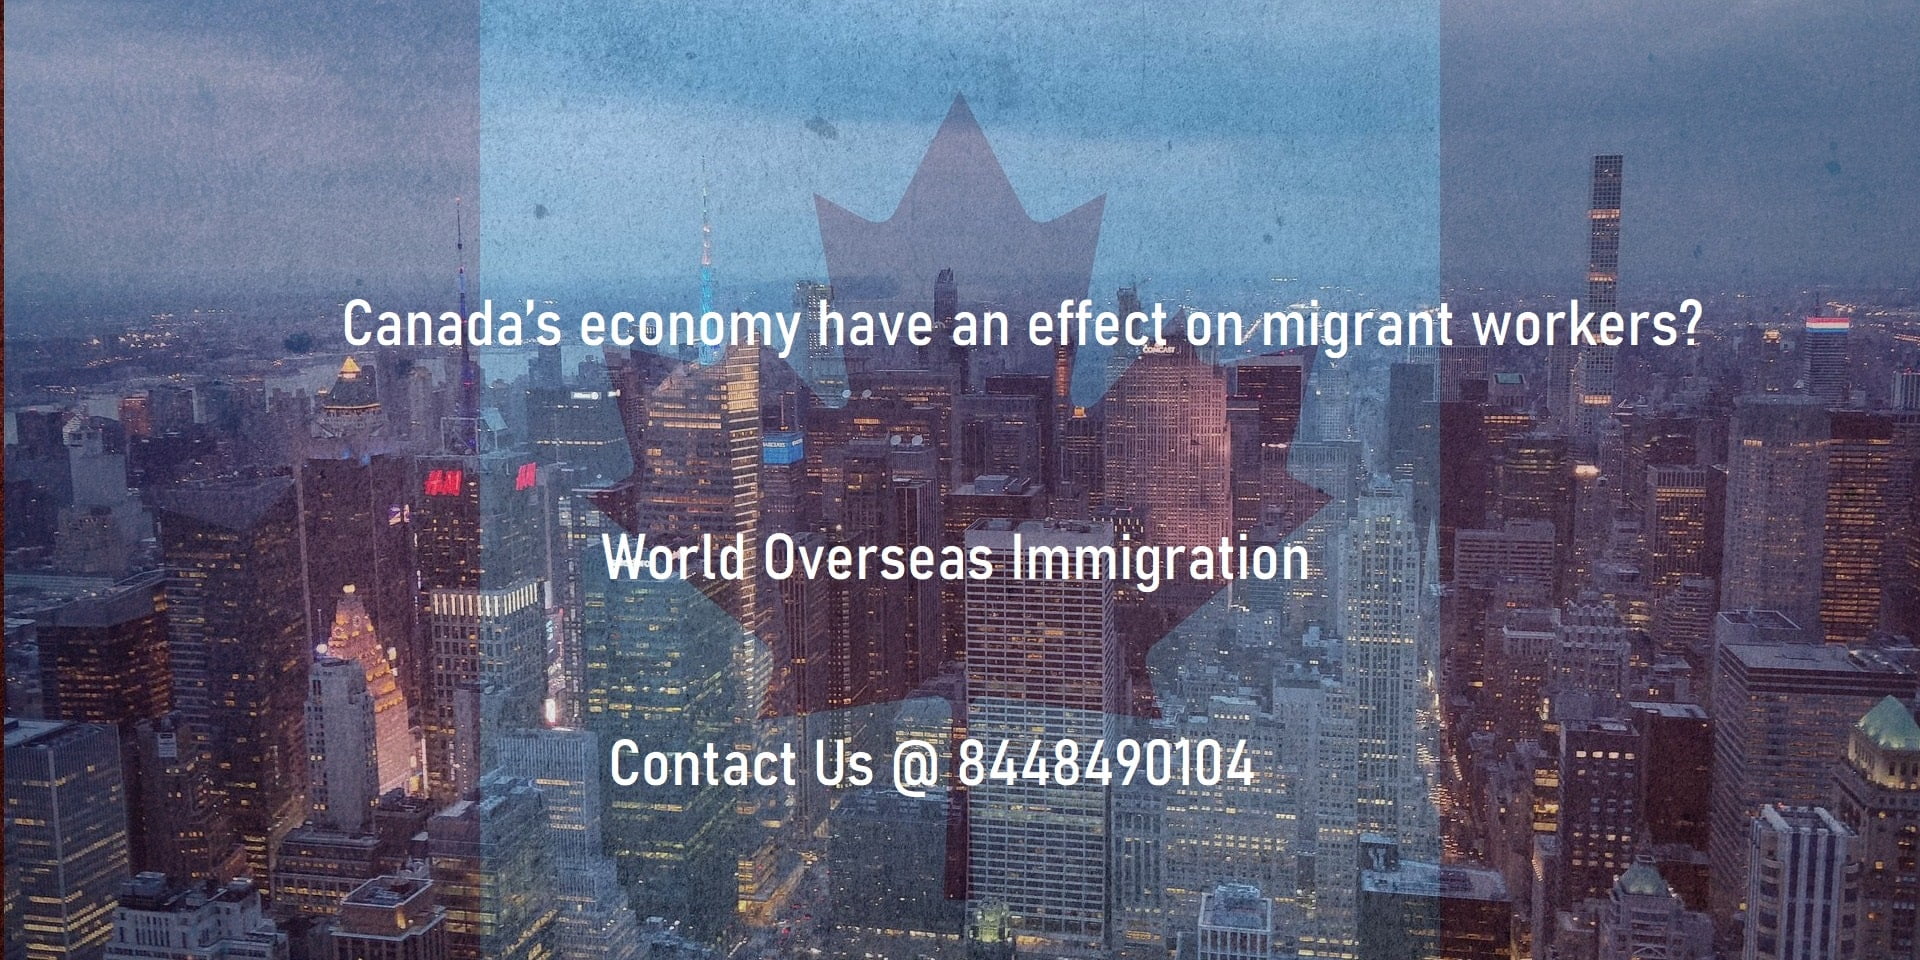 How Canada’s economy effecting migrant workers